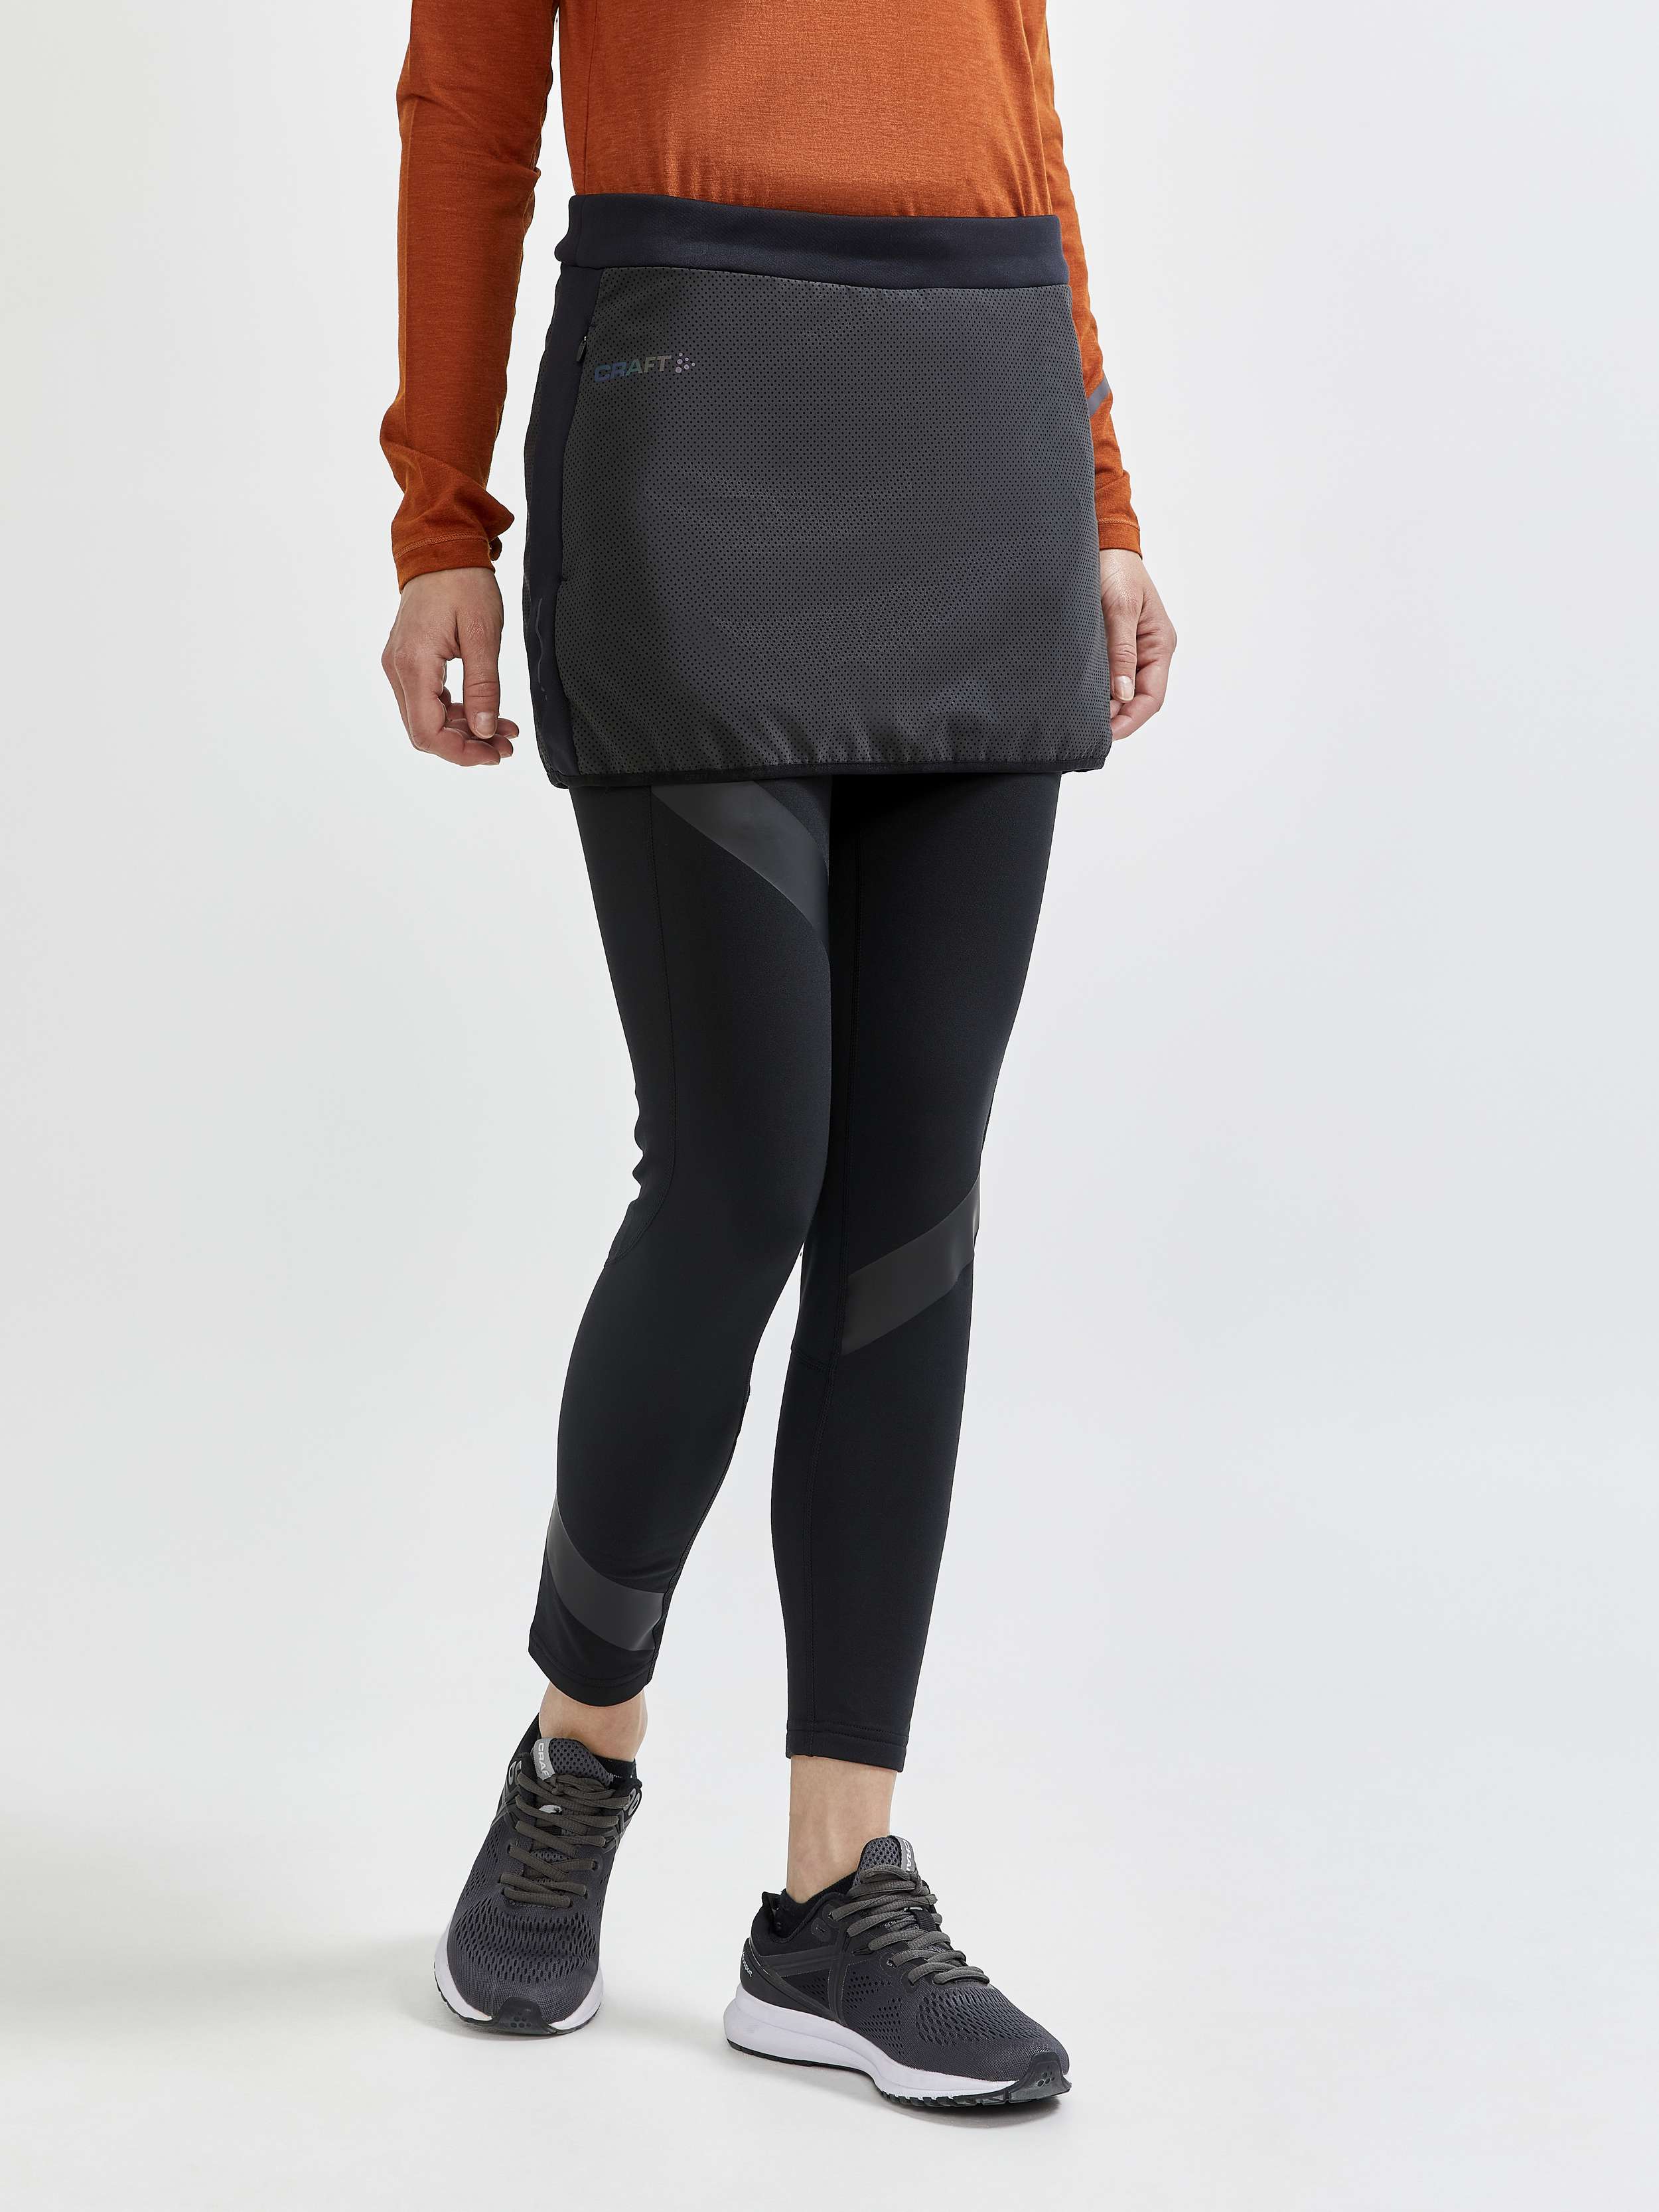 Lumen SubZ Skirt W - Black | Craft Sportswear